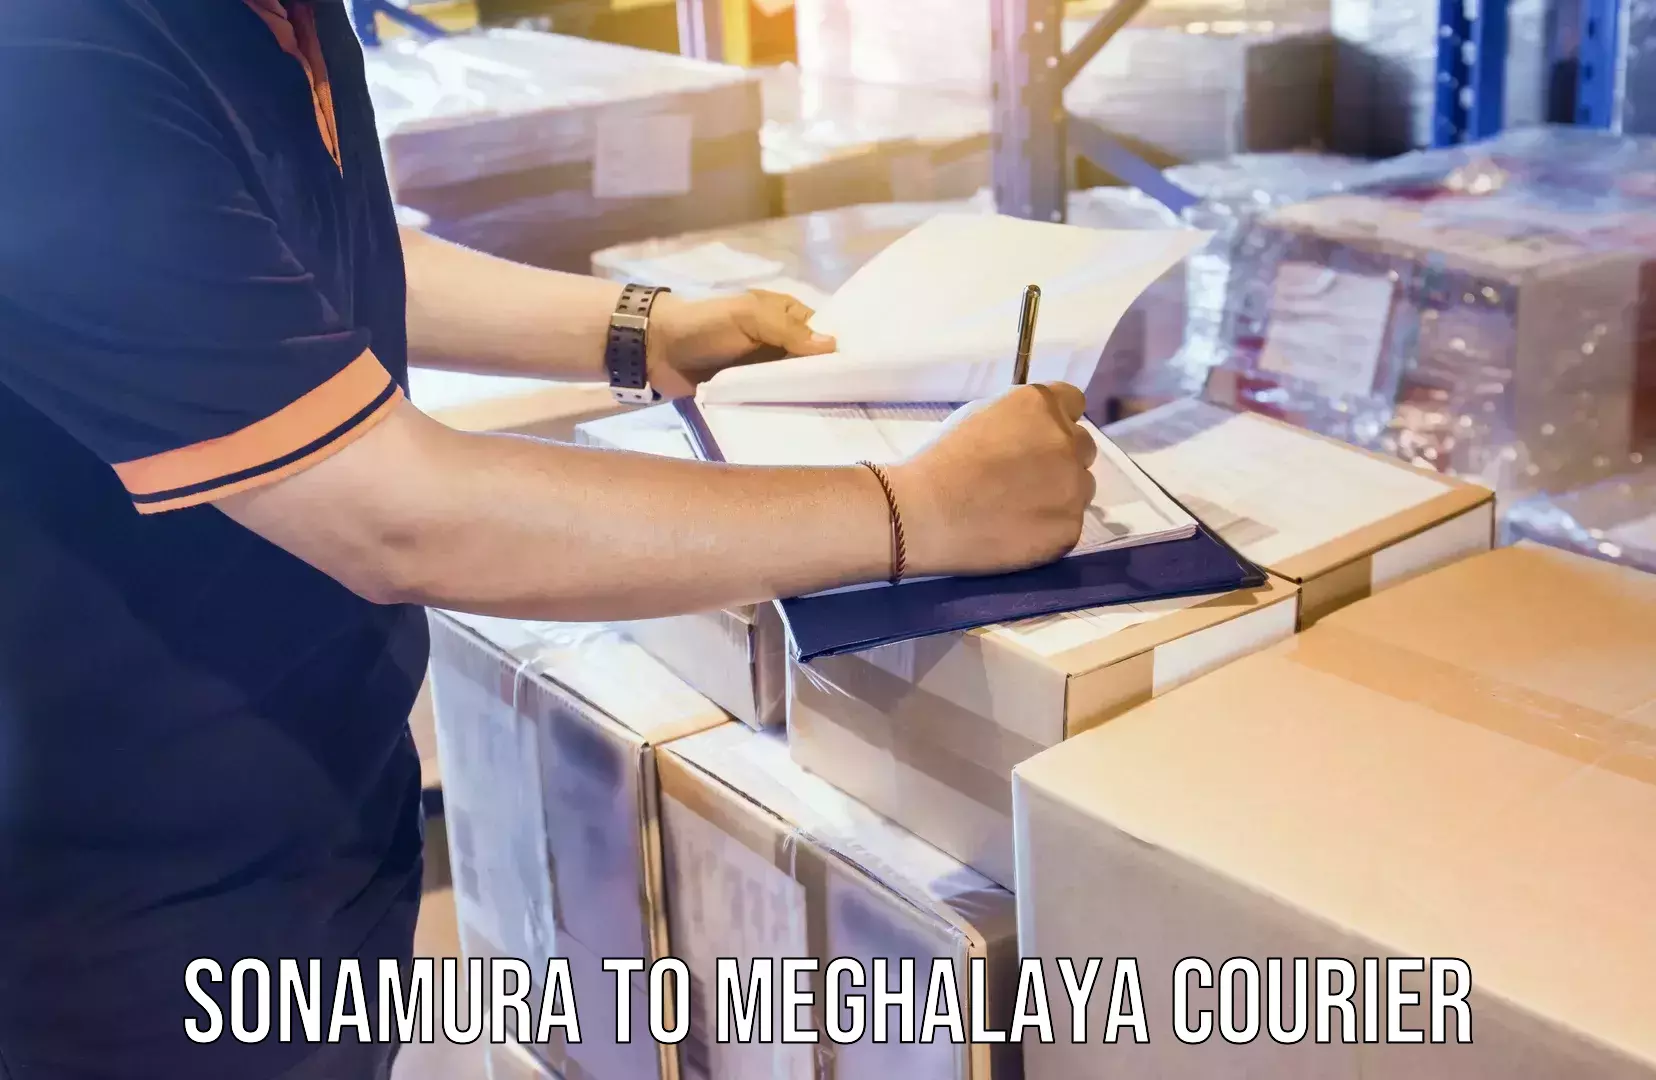 Courier service partnerships Sonamura to Meghalaya